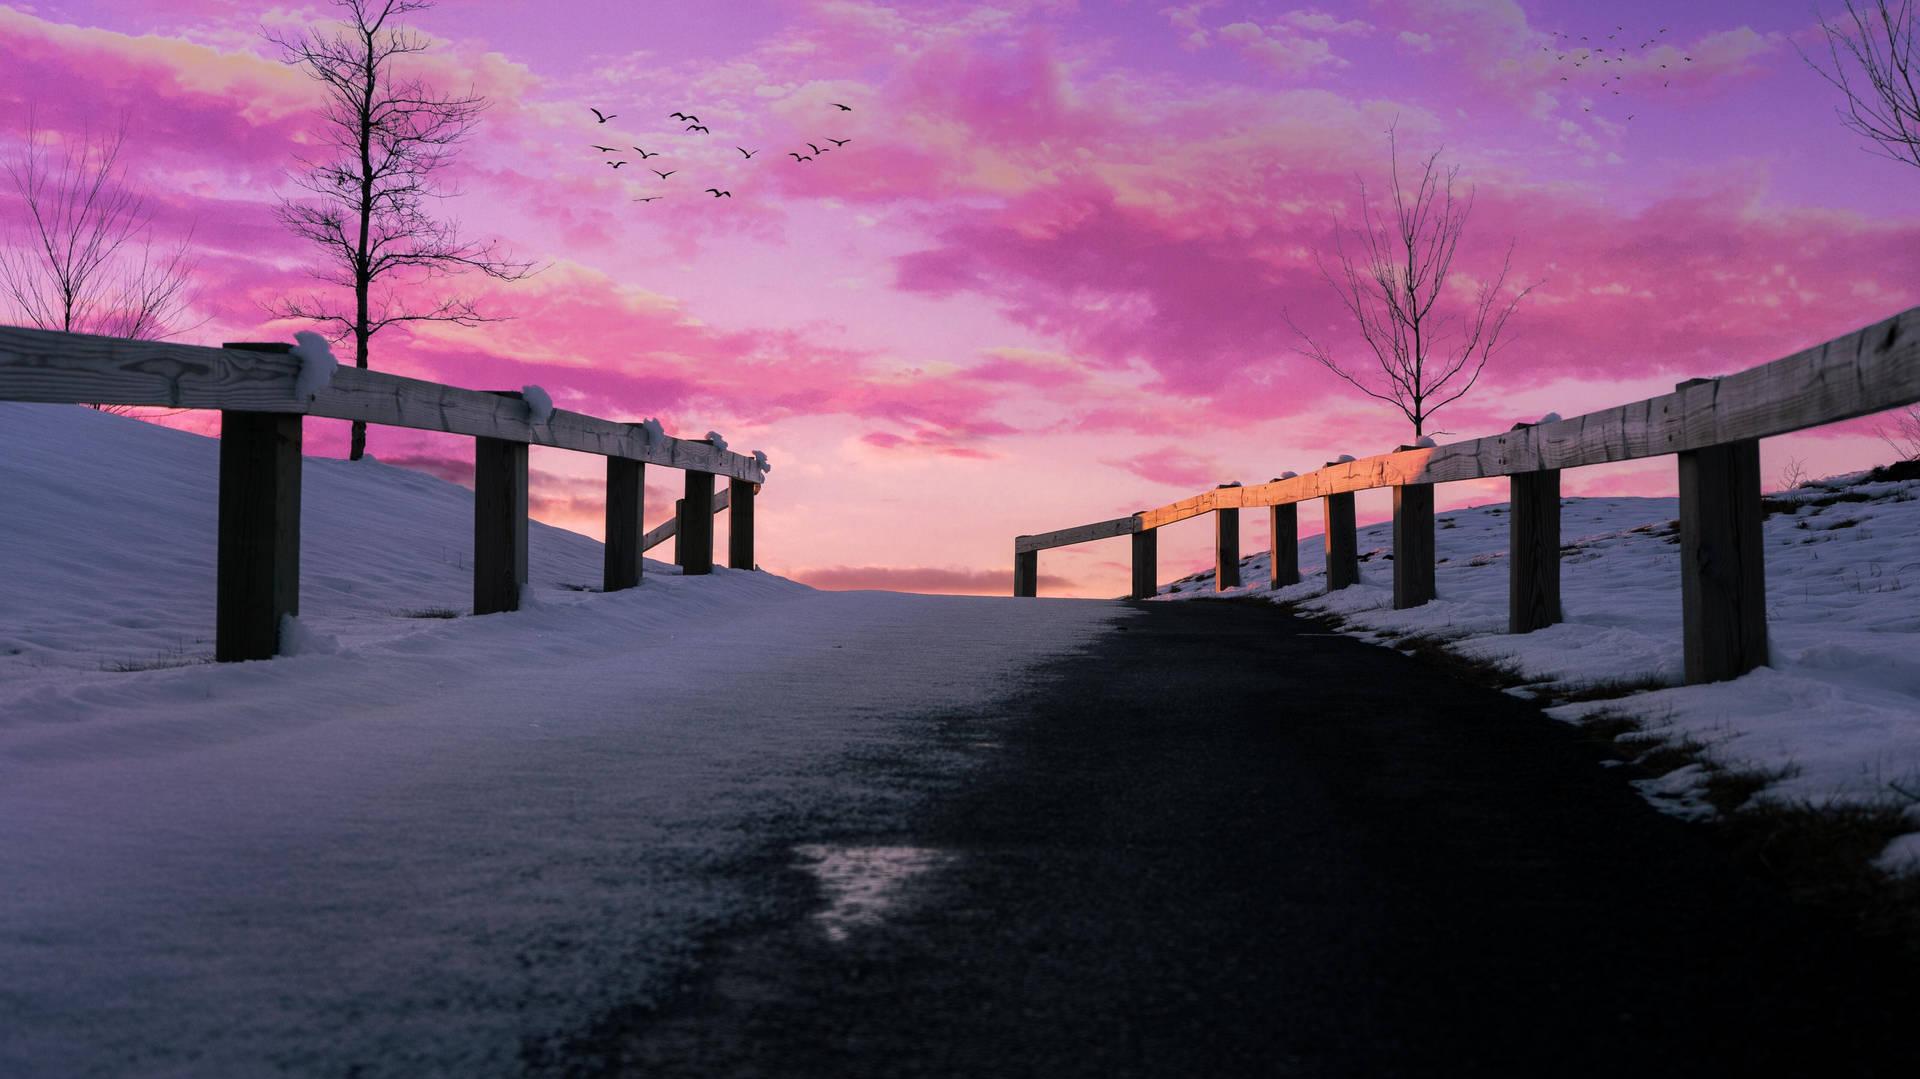 Download Pink Sunset Over Winter Trail iMac 4K Wallpaper